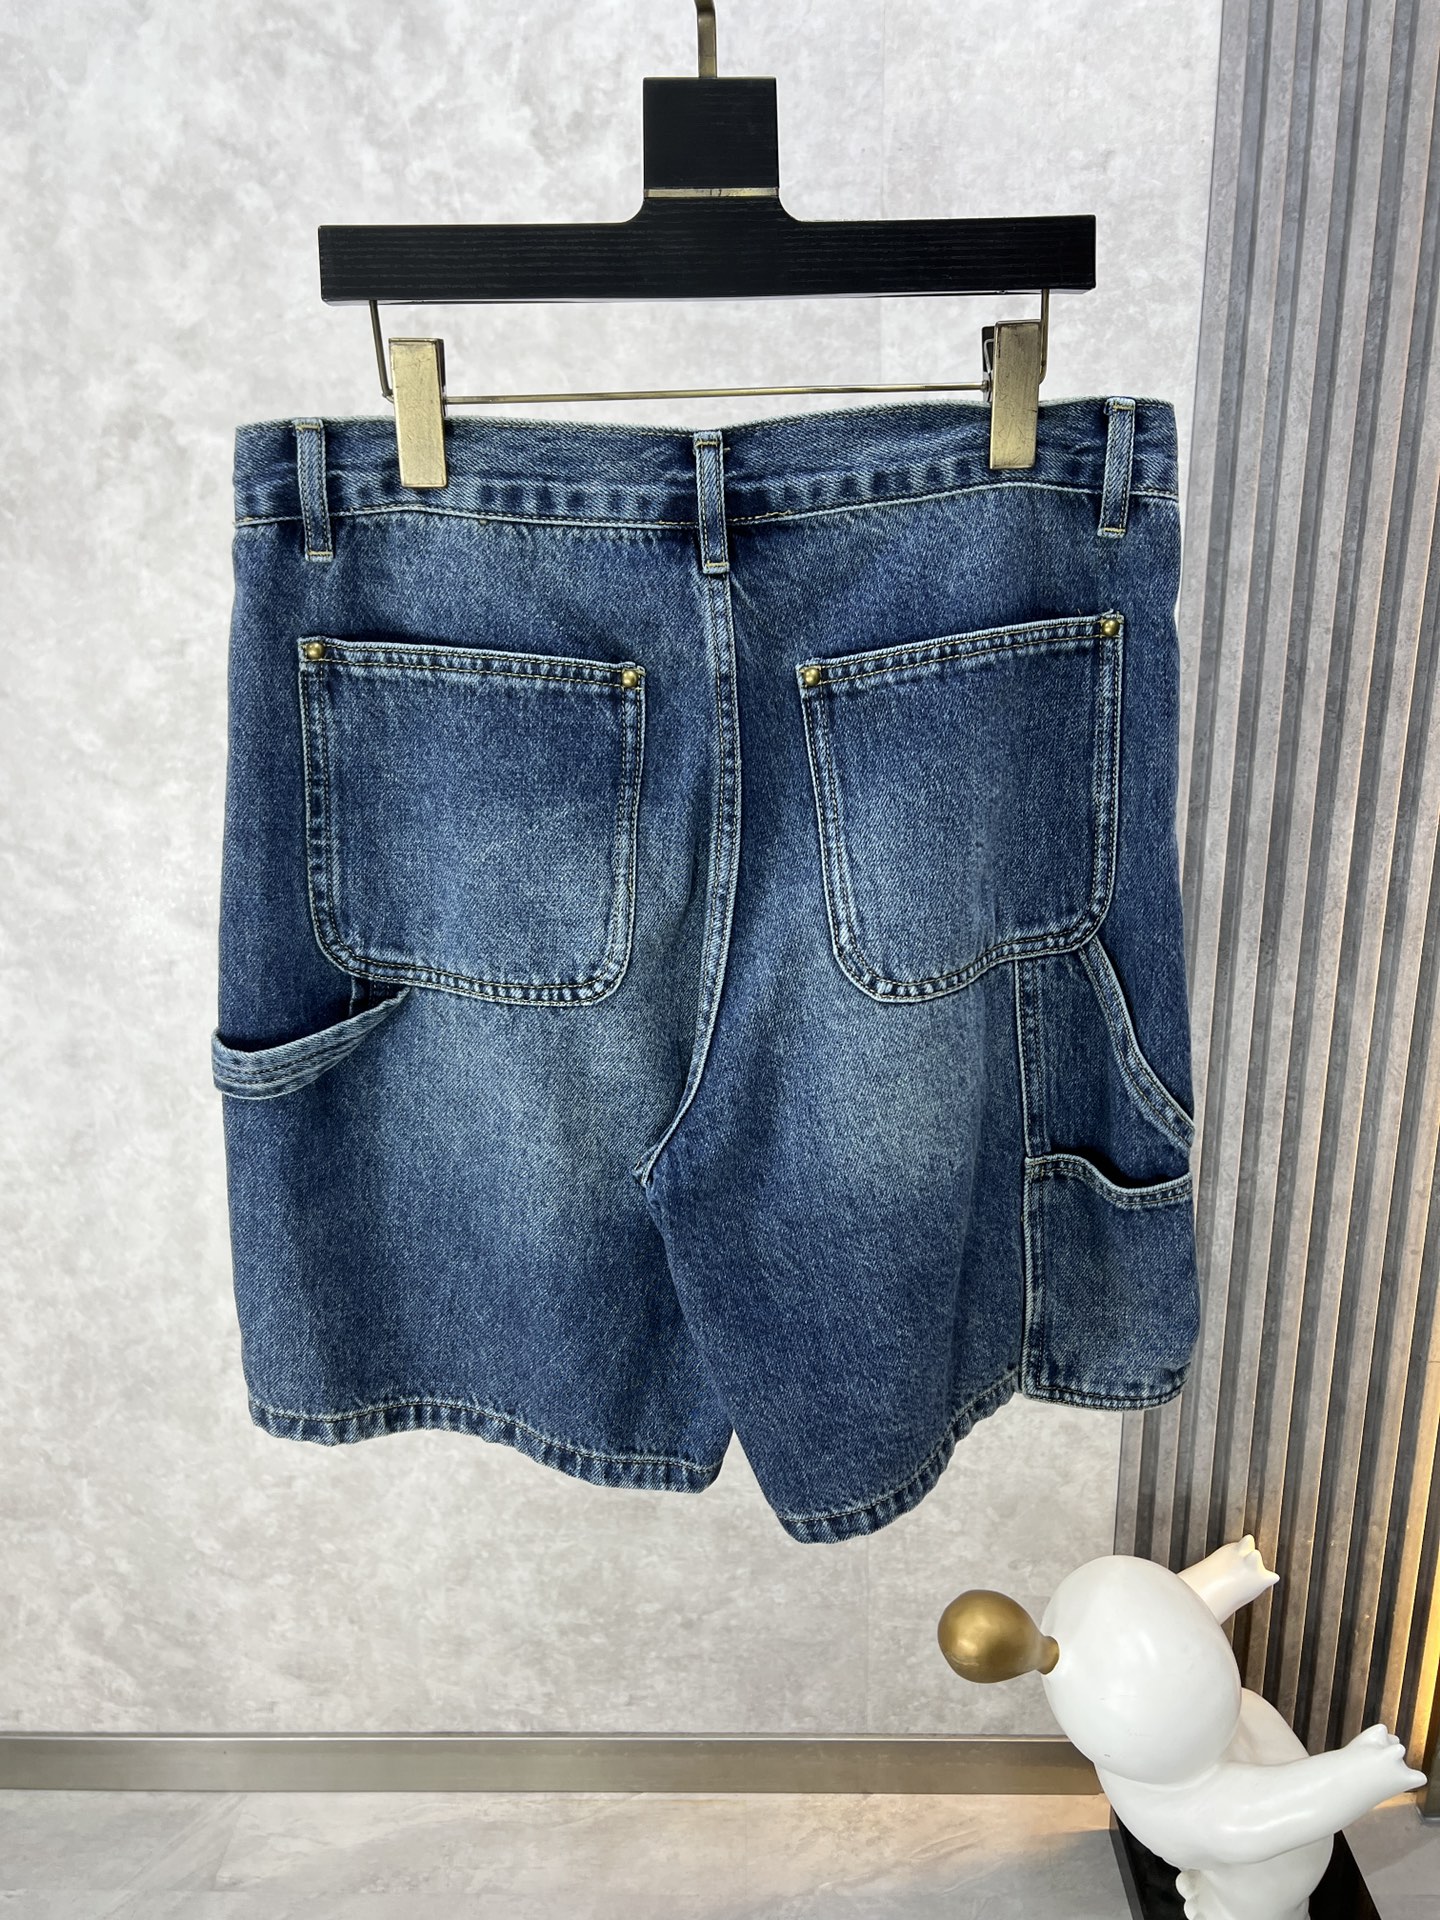 v2024SS新品男士牛仔短裤细节相当精湛考究经过水洗打磨工艺变得非常出彩塑造出不羁和硬朗的个性色彩独特